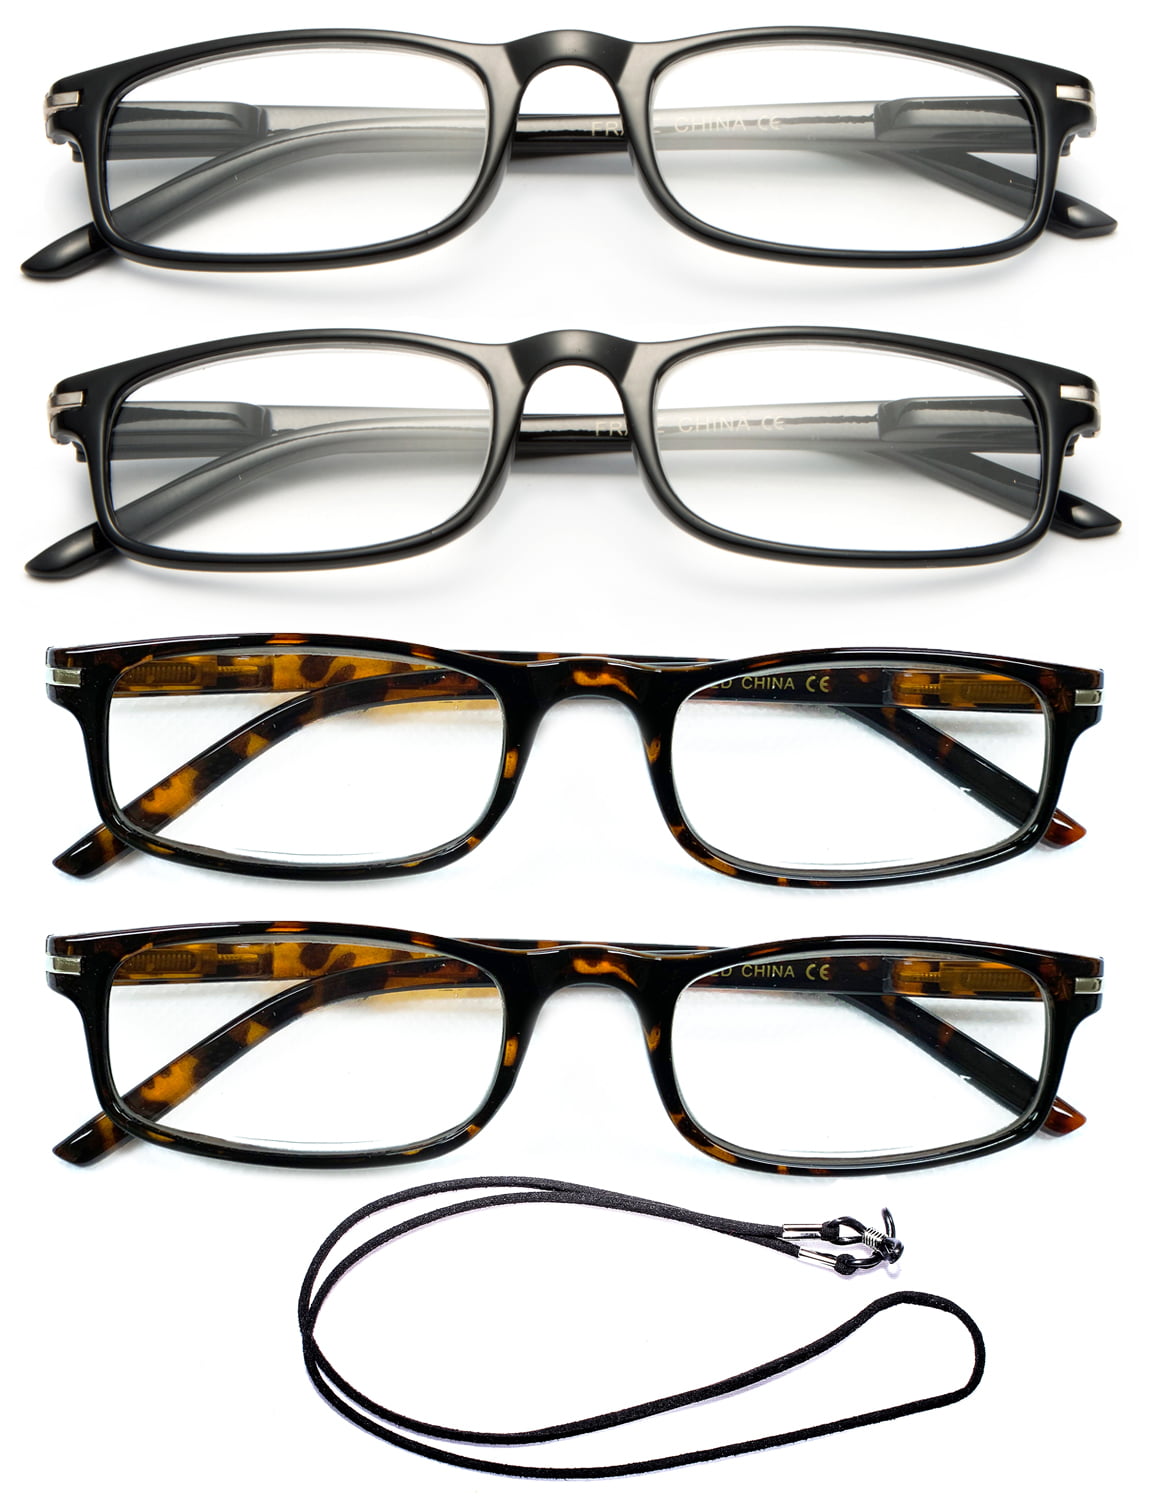 4 Pair Newbee Fashion Unisex Modern Look Slim Frame Spring Temple Light Weight Reading Glasses